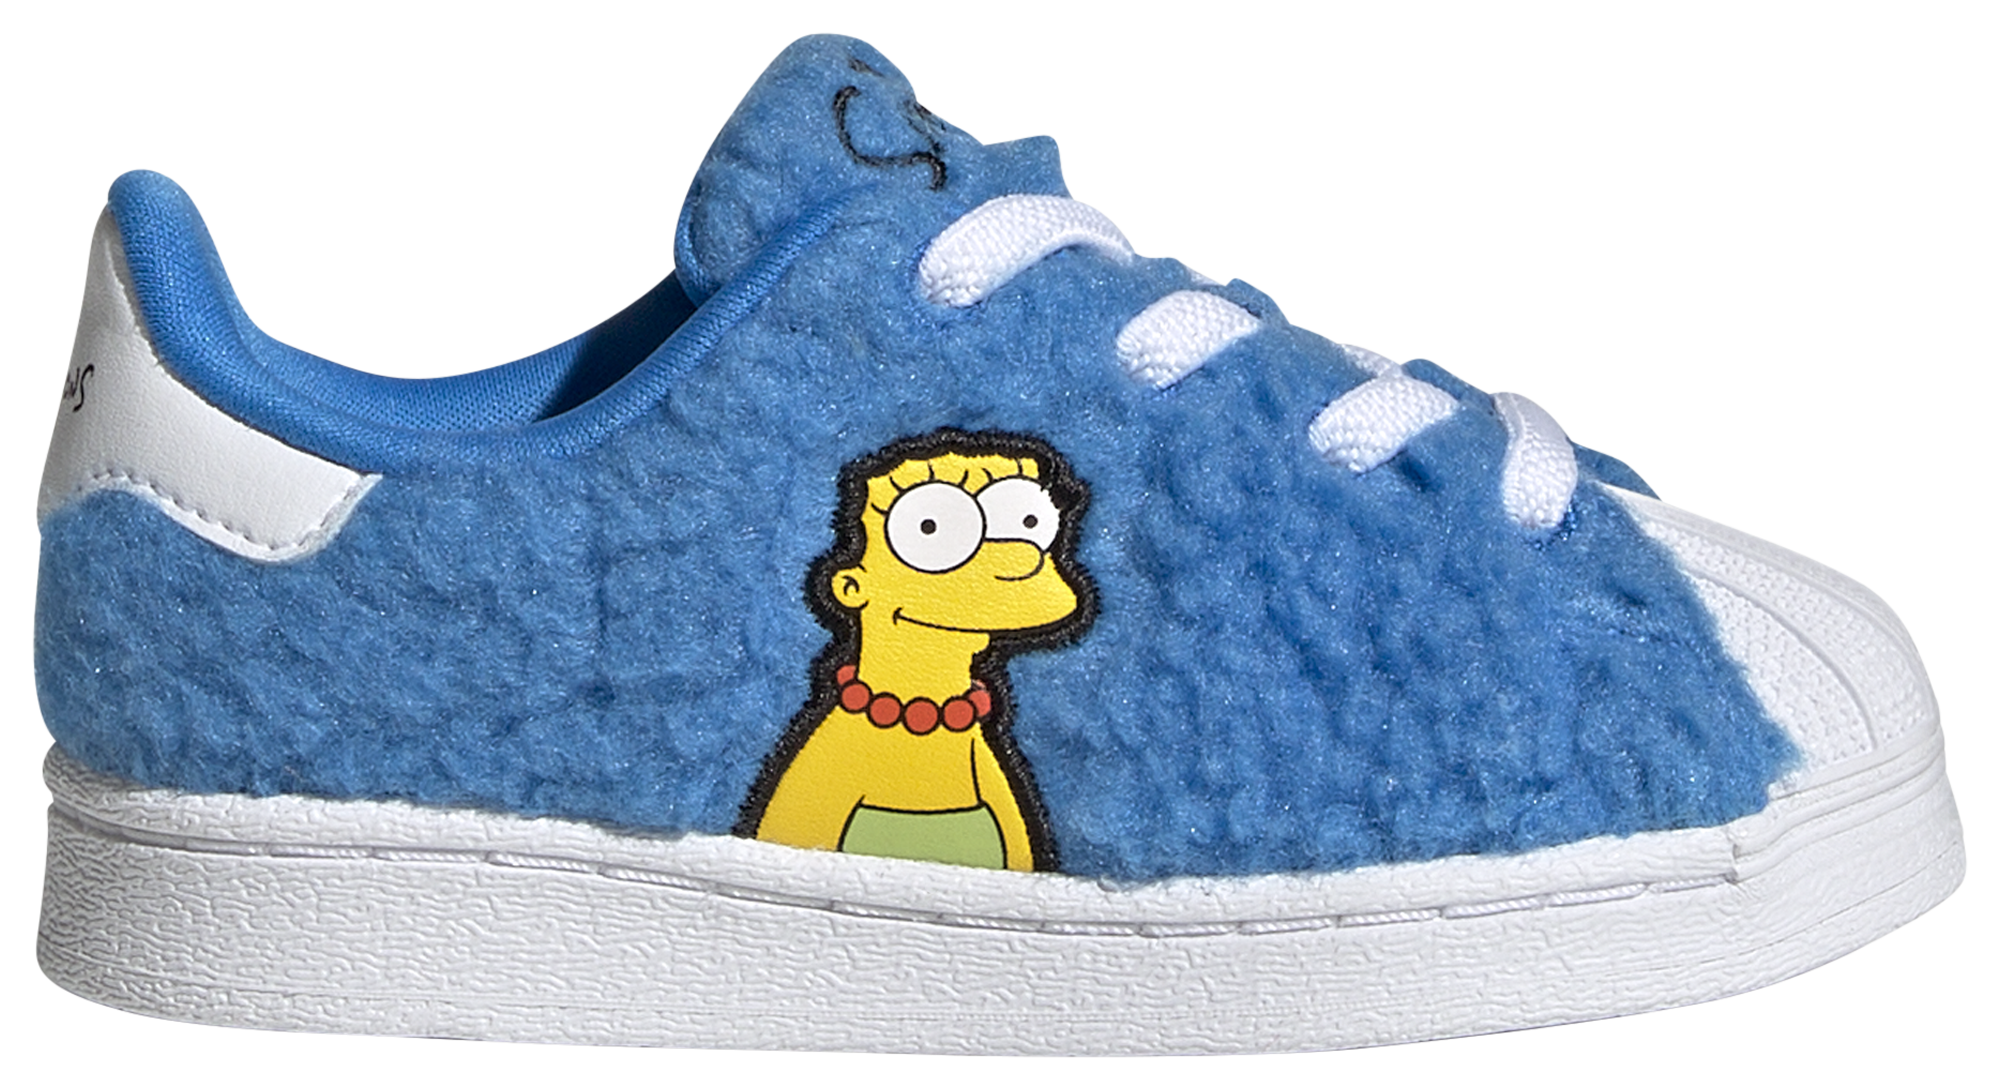 Адидас симпсон. Кеды адидас симпсоны. Adidas Simpsons кроссовки. Adidas Simpson кроссовки Superstar. Адидас симпсоны гомер кеды.